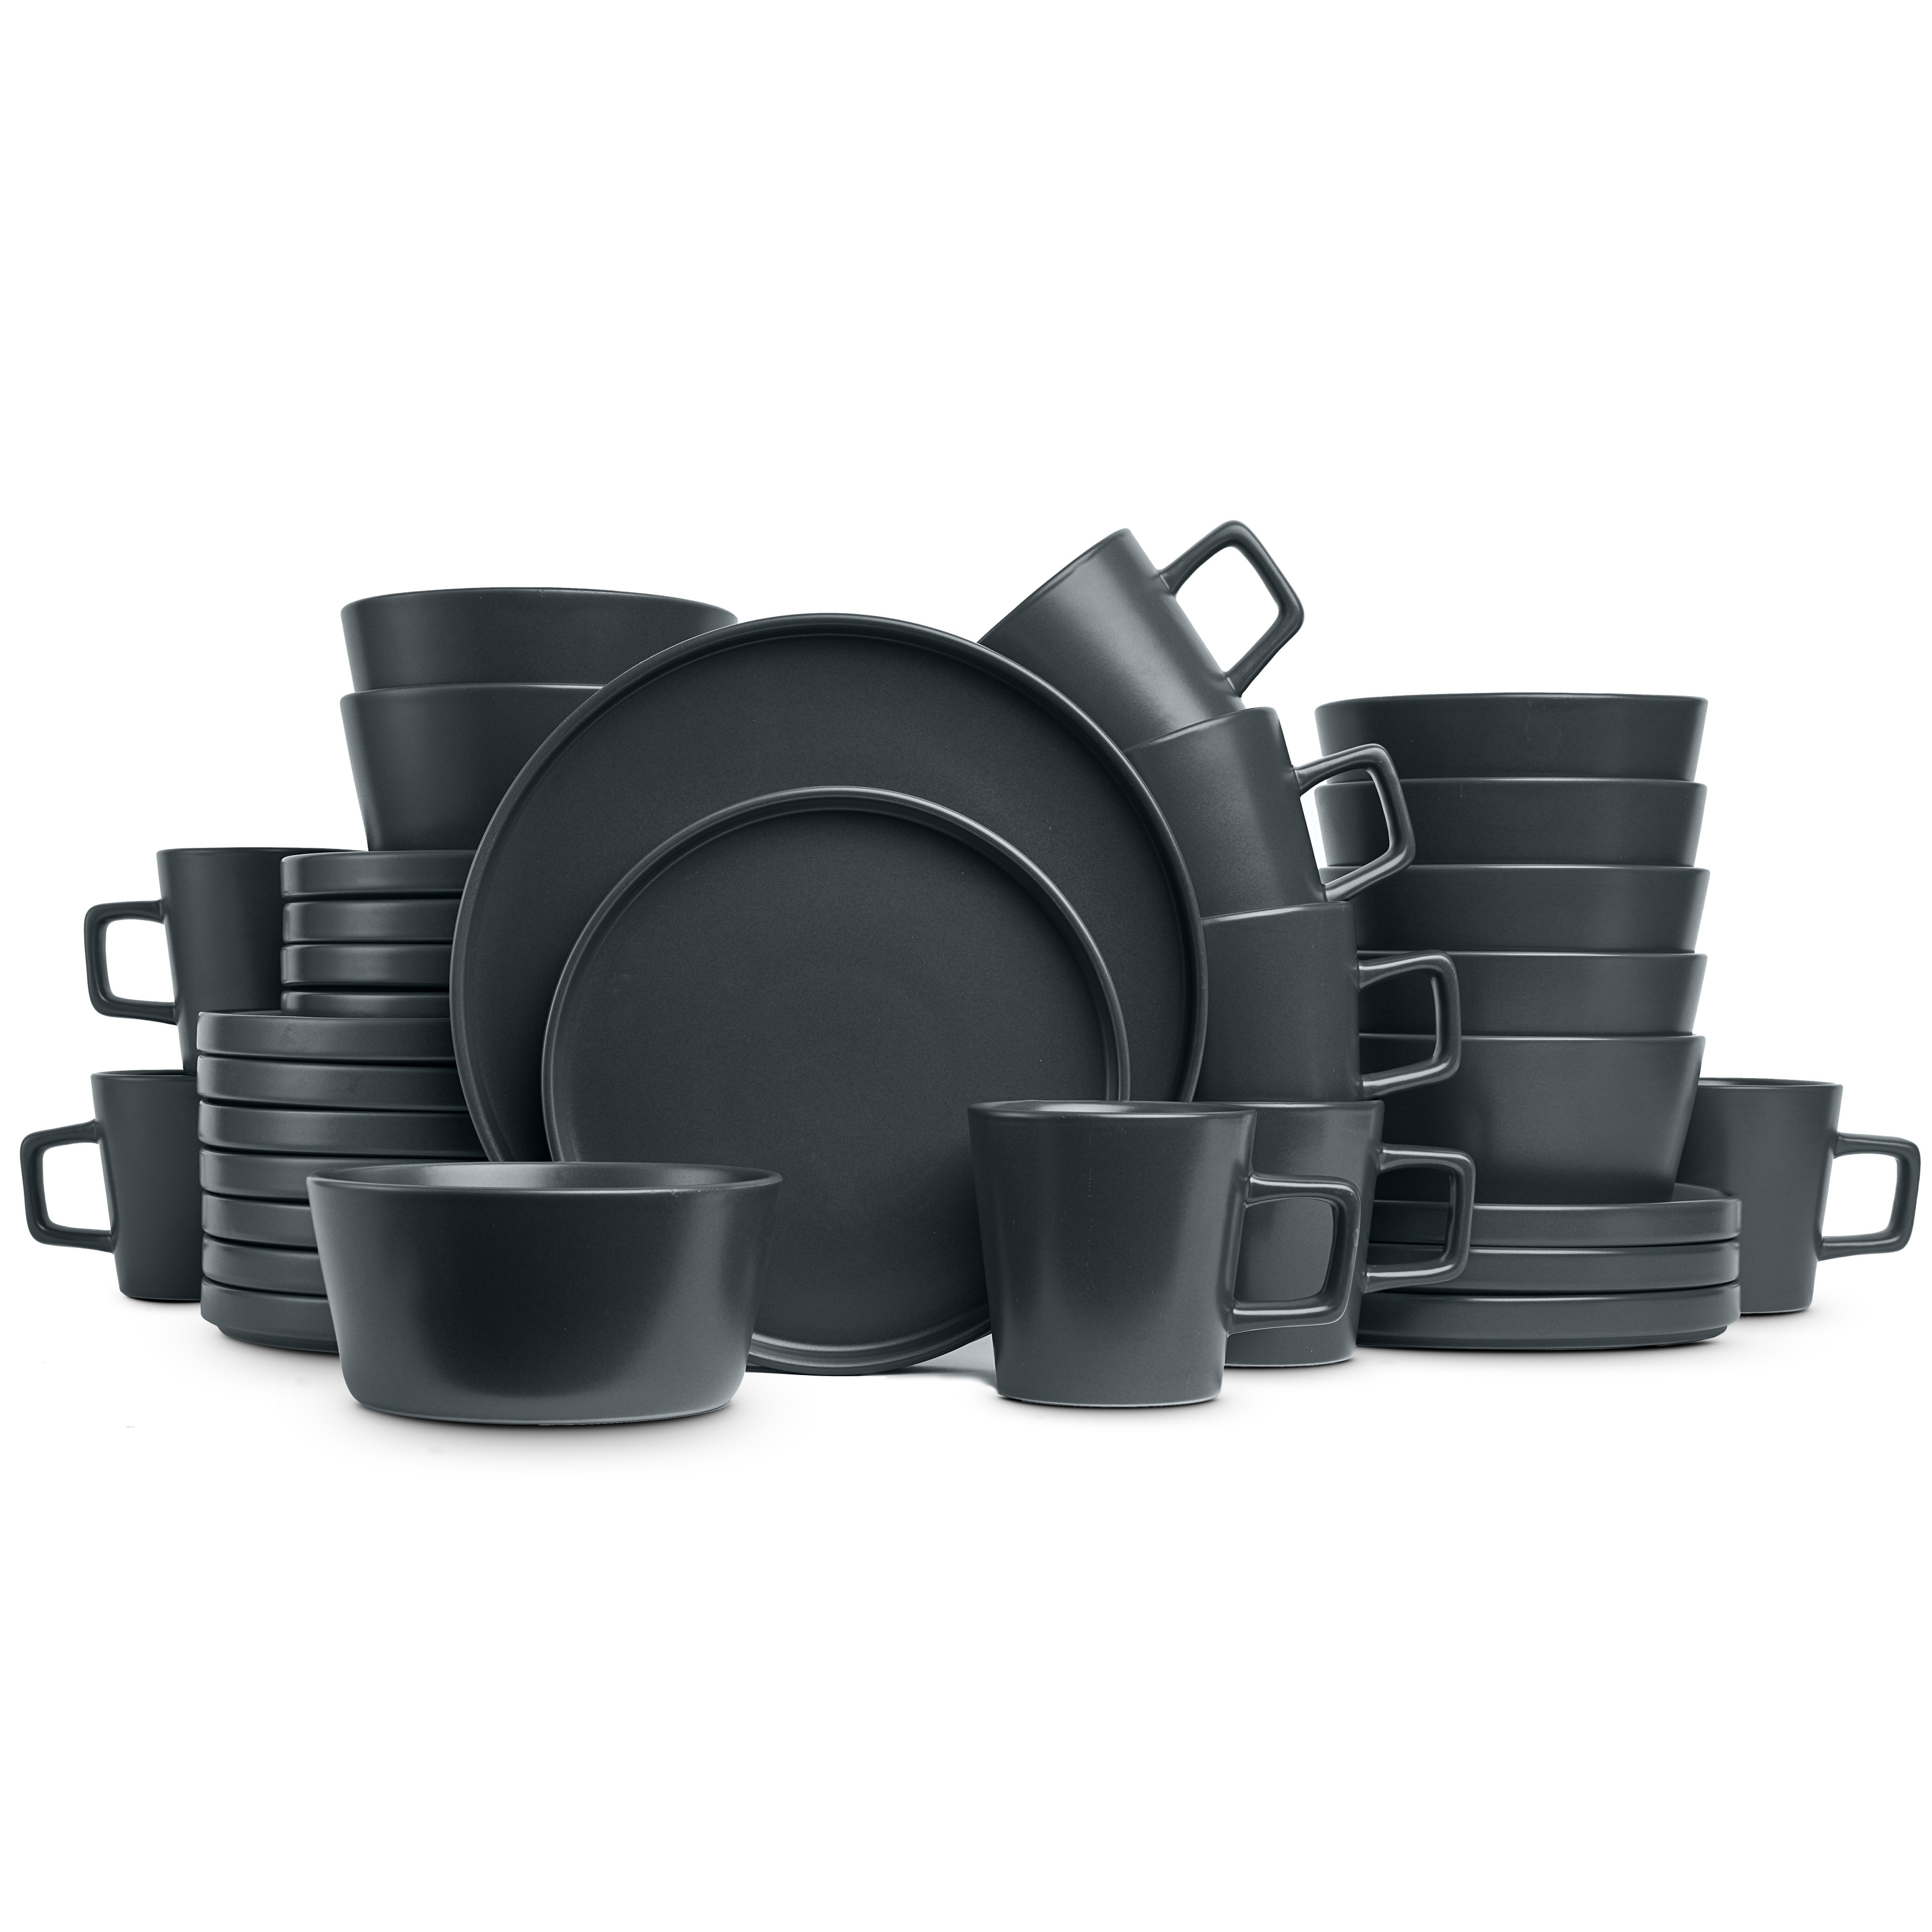 Stone Lain Coupe Dinnerware Set - Service for 4 - Black Matte - 16 Piece Stoneware